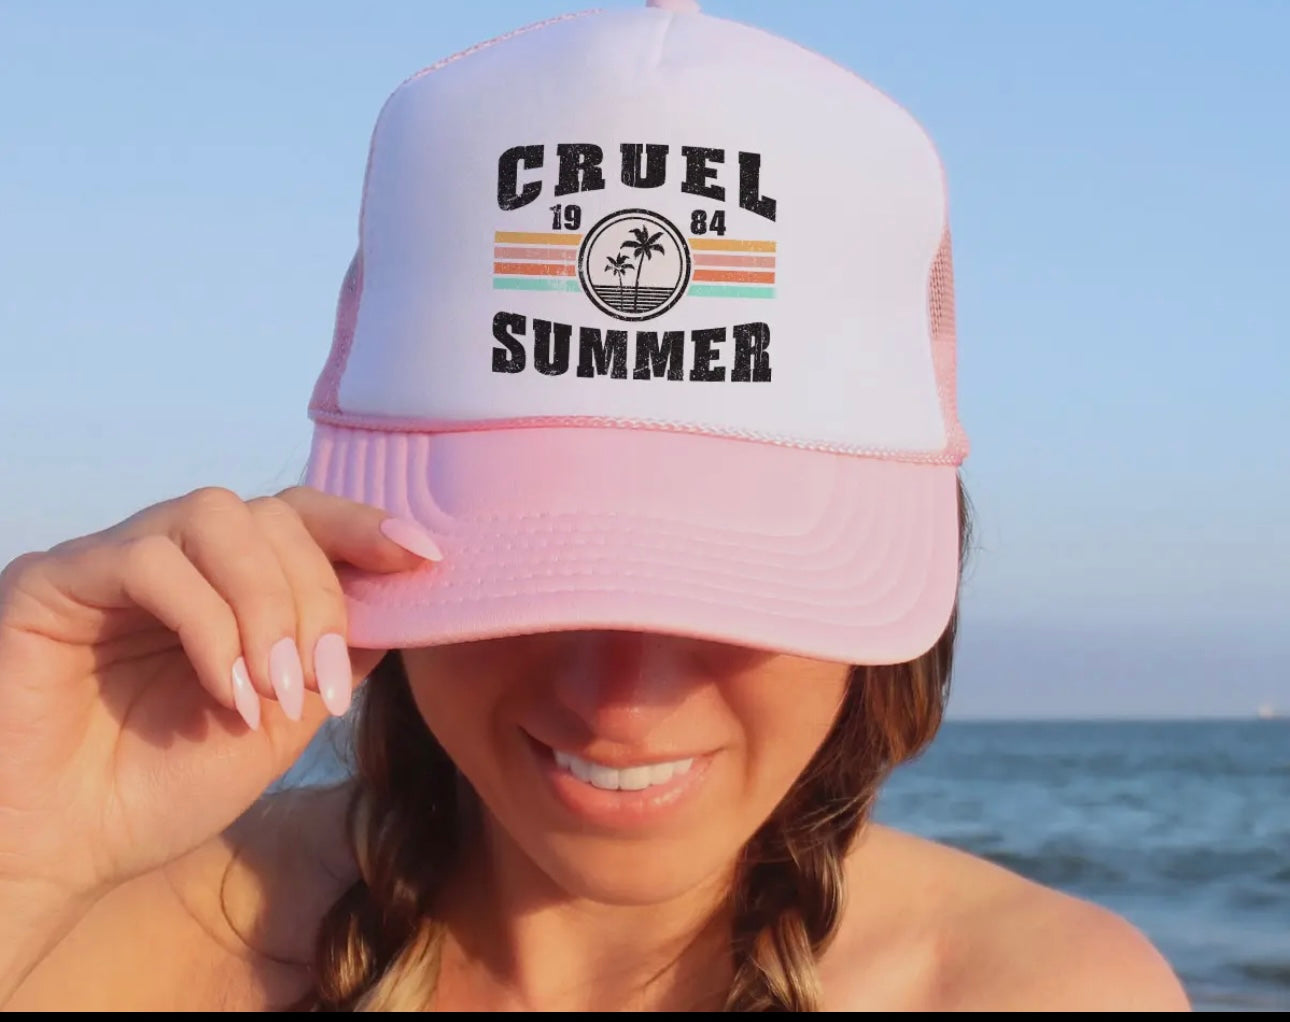 Cruel Summer Trucker Hat